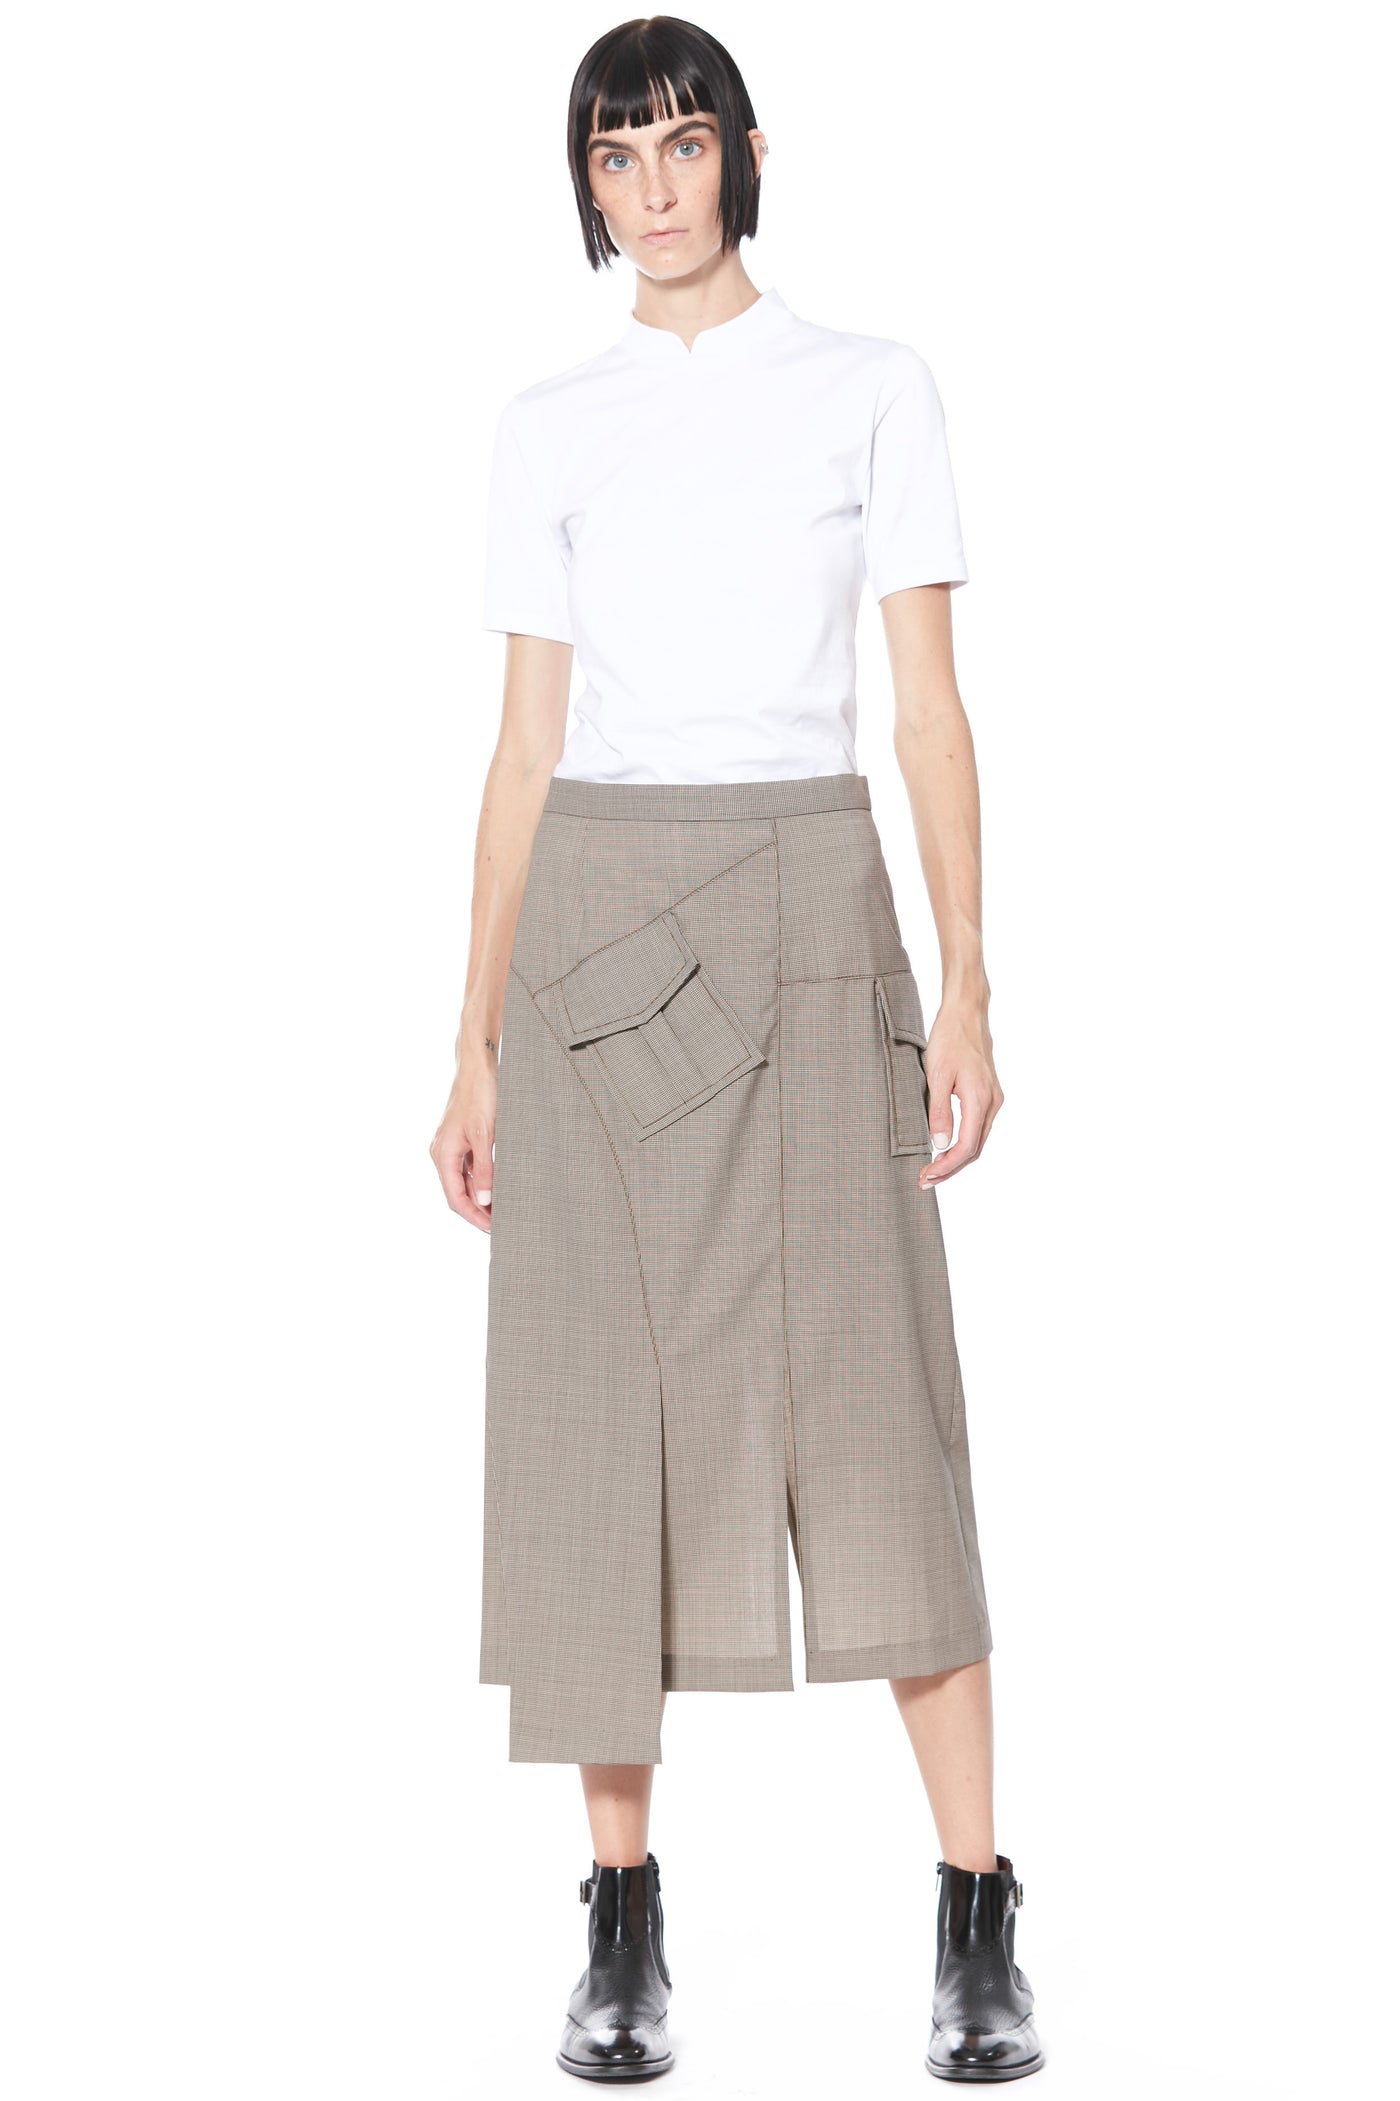 Grey Wool Deconstructed Midi Skirt